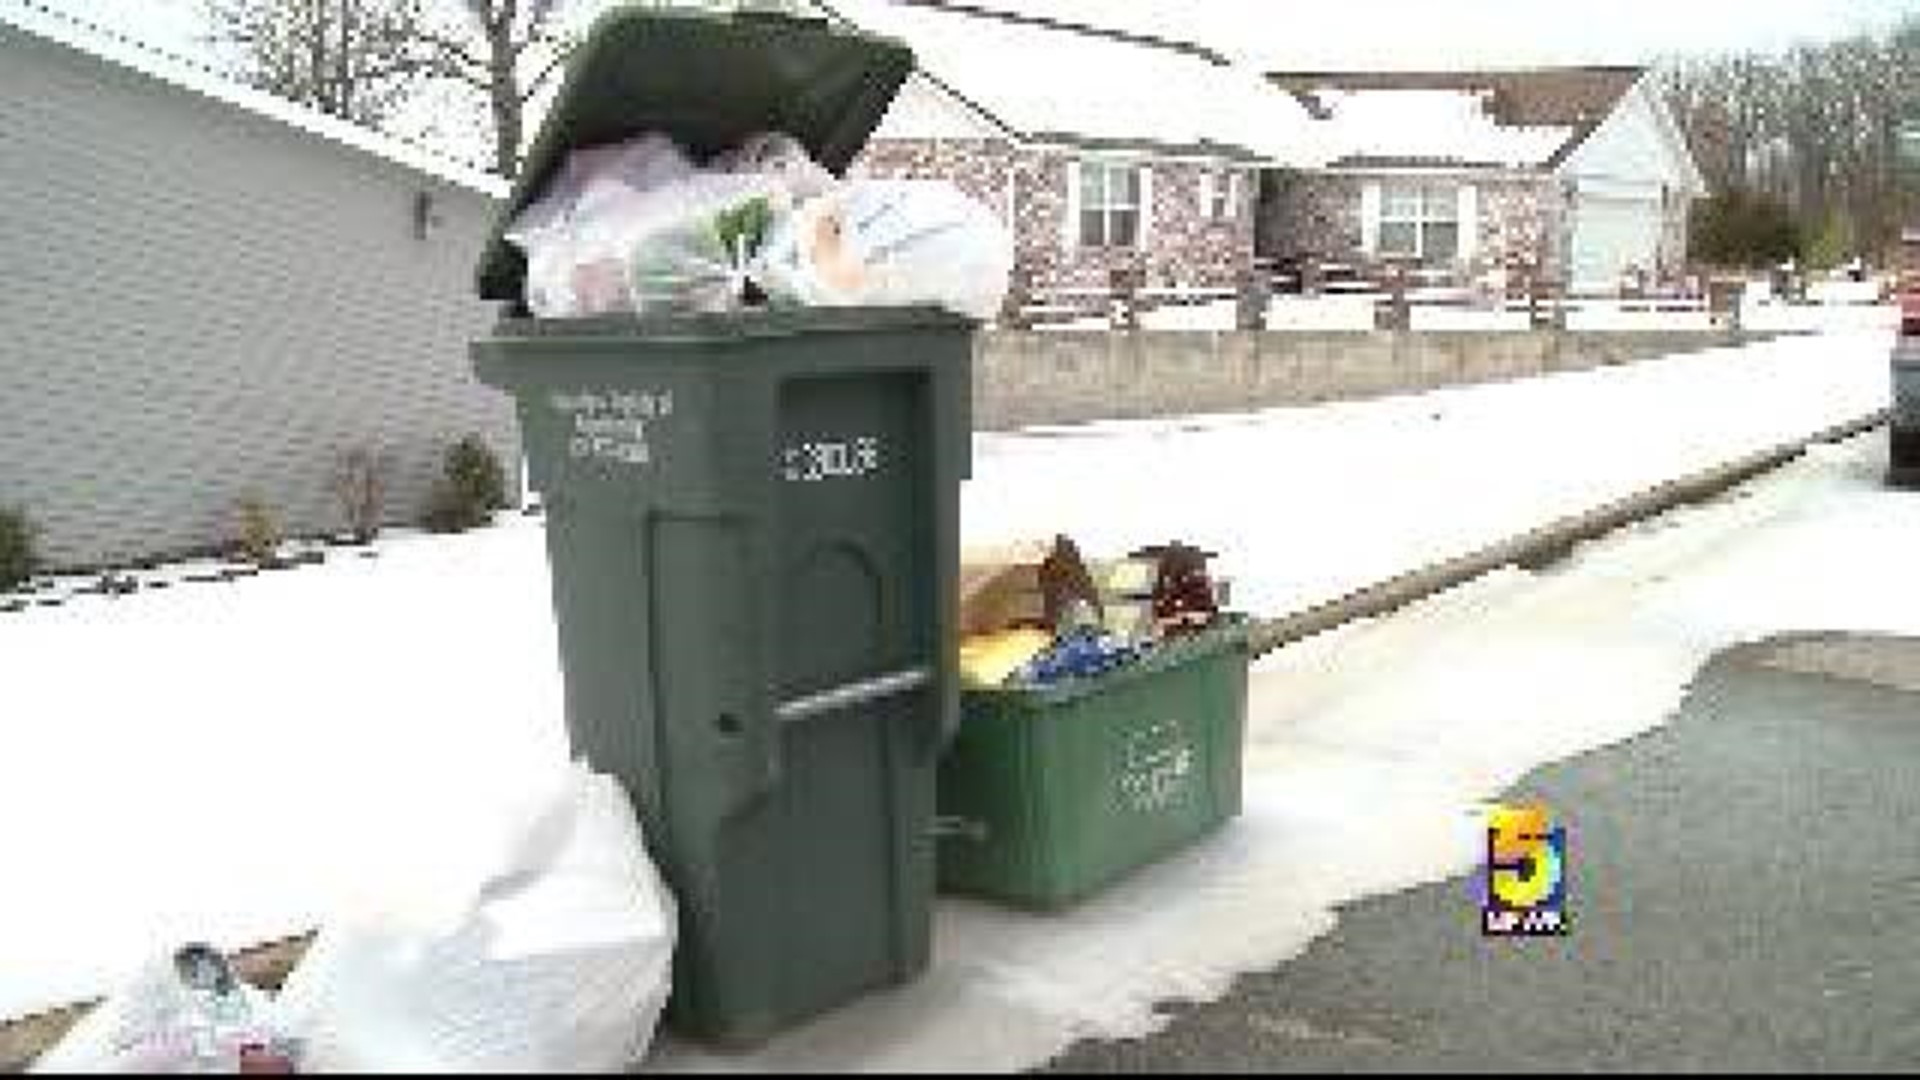 Fayetteville Trash Service Delayed